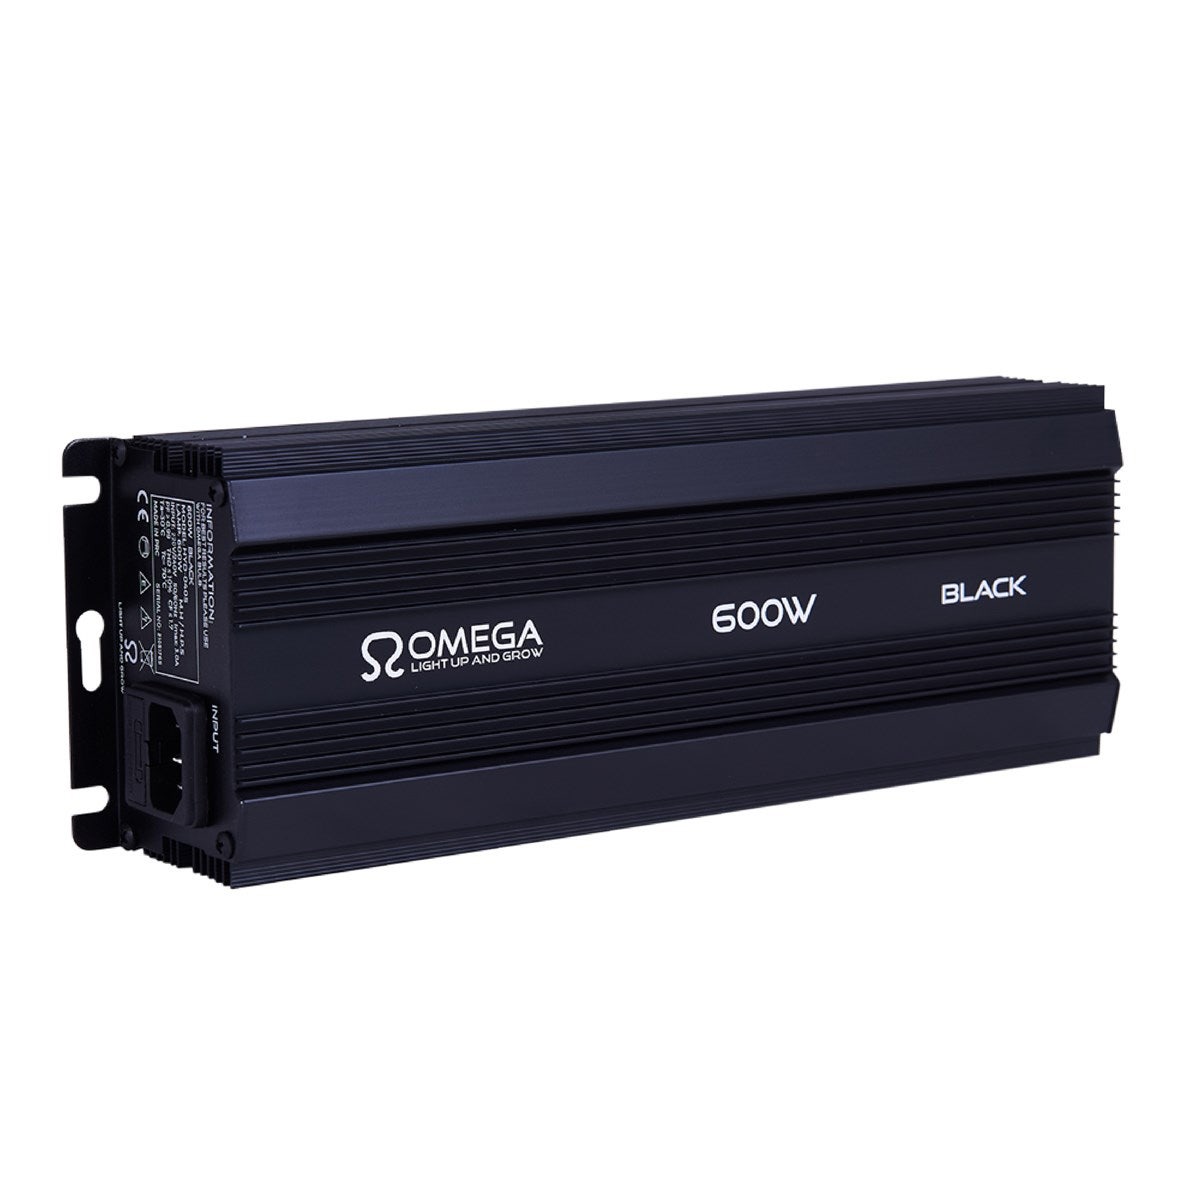 Omega Black 600w Dimmable Digital Ballast